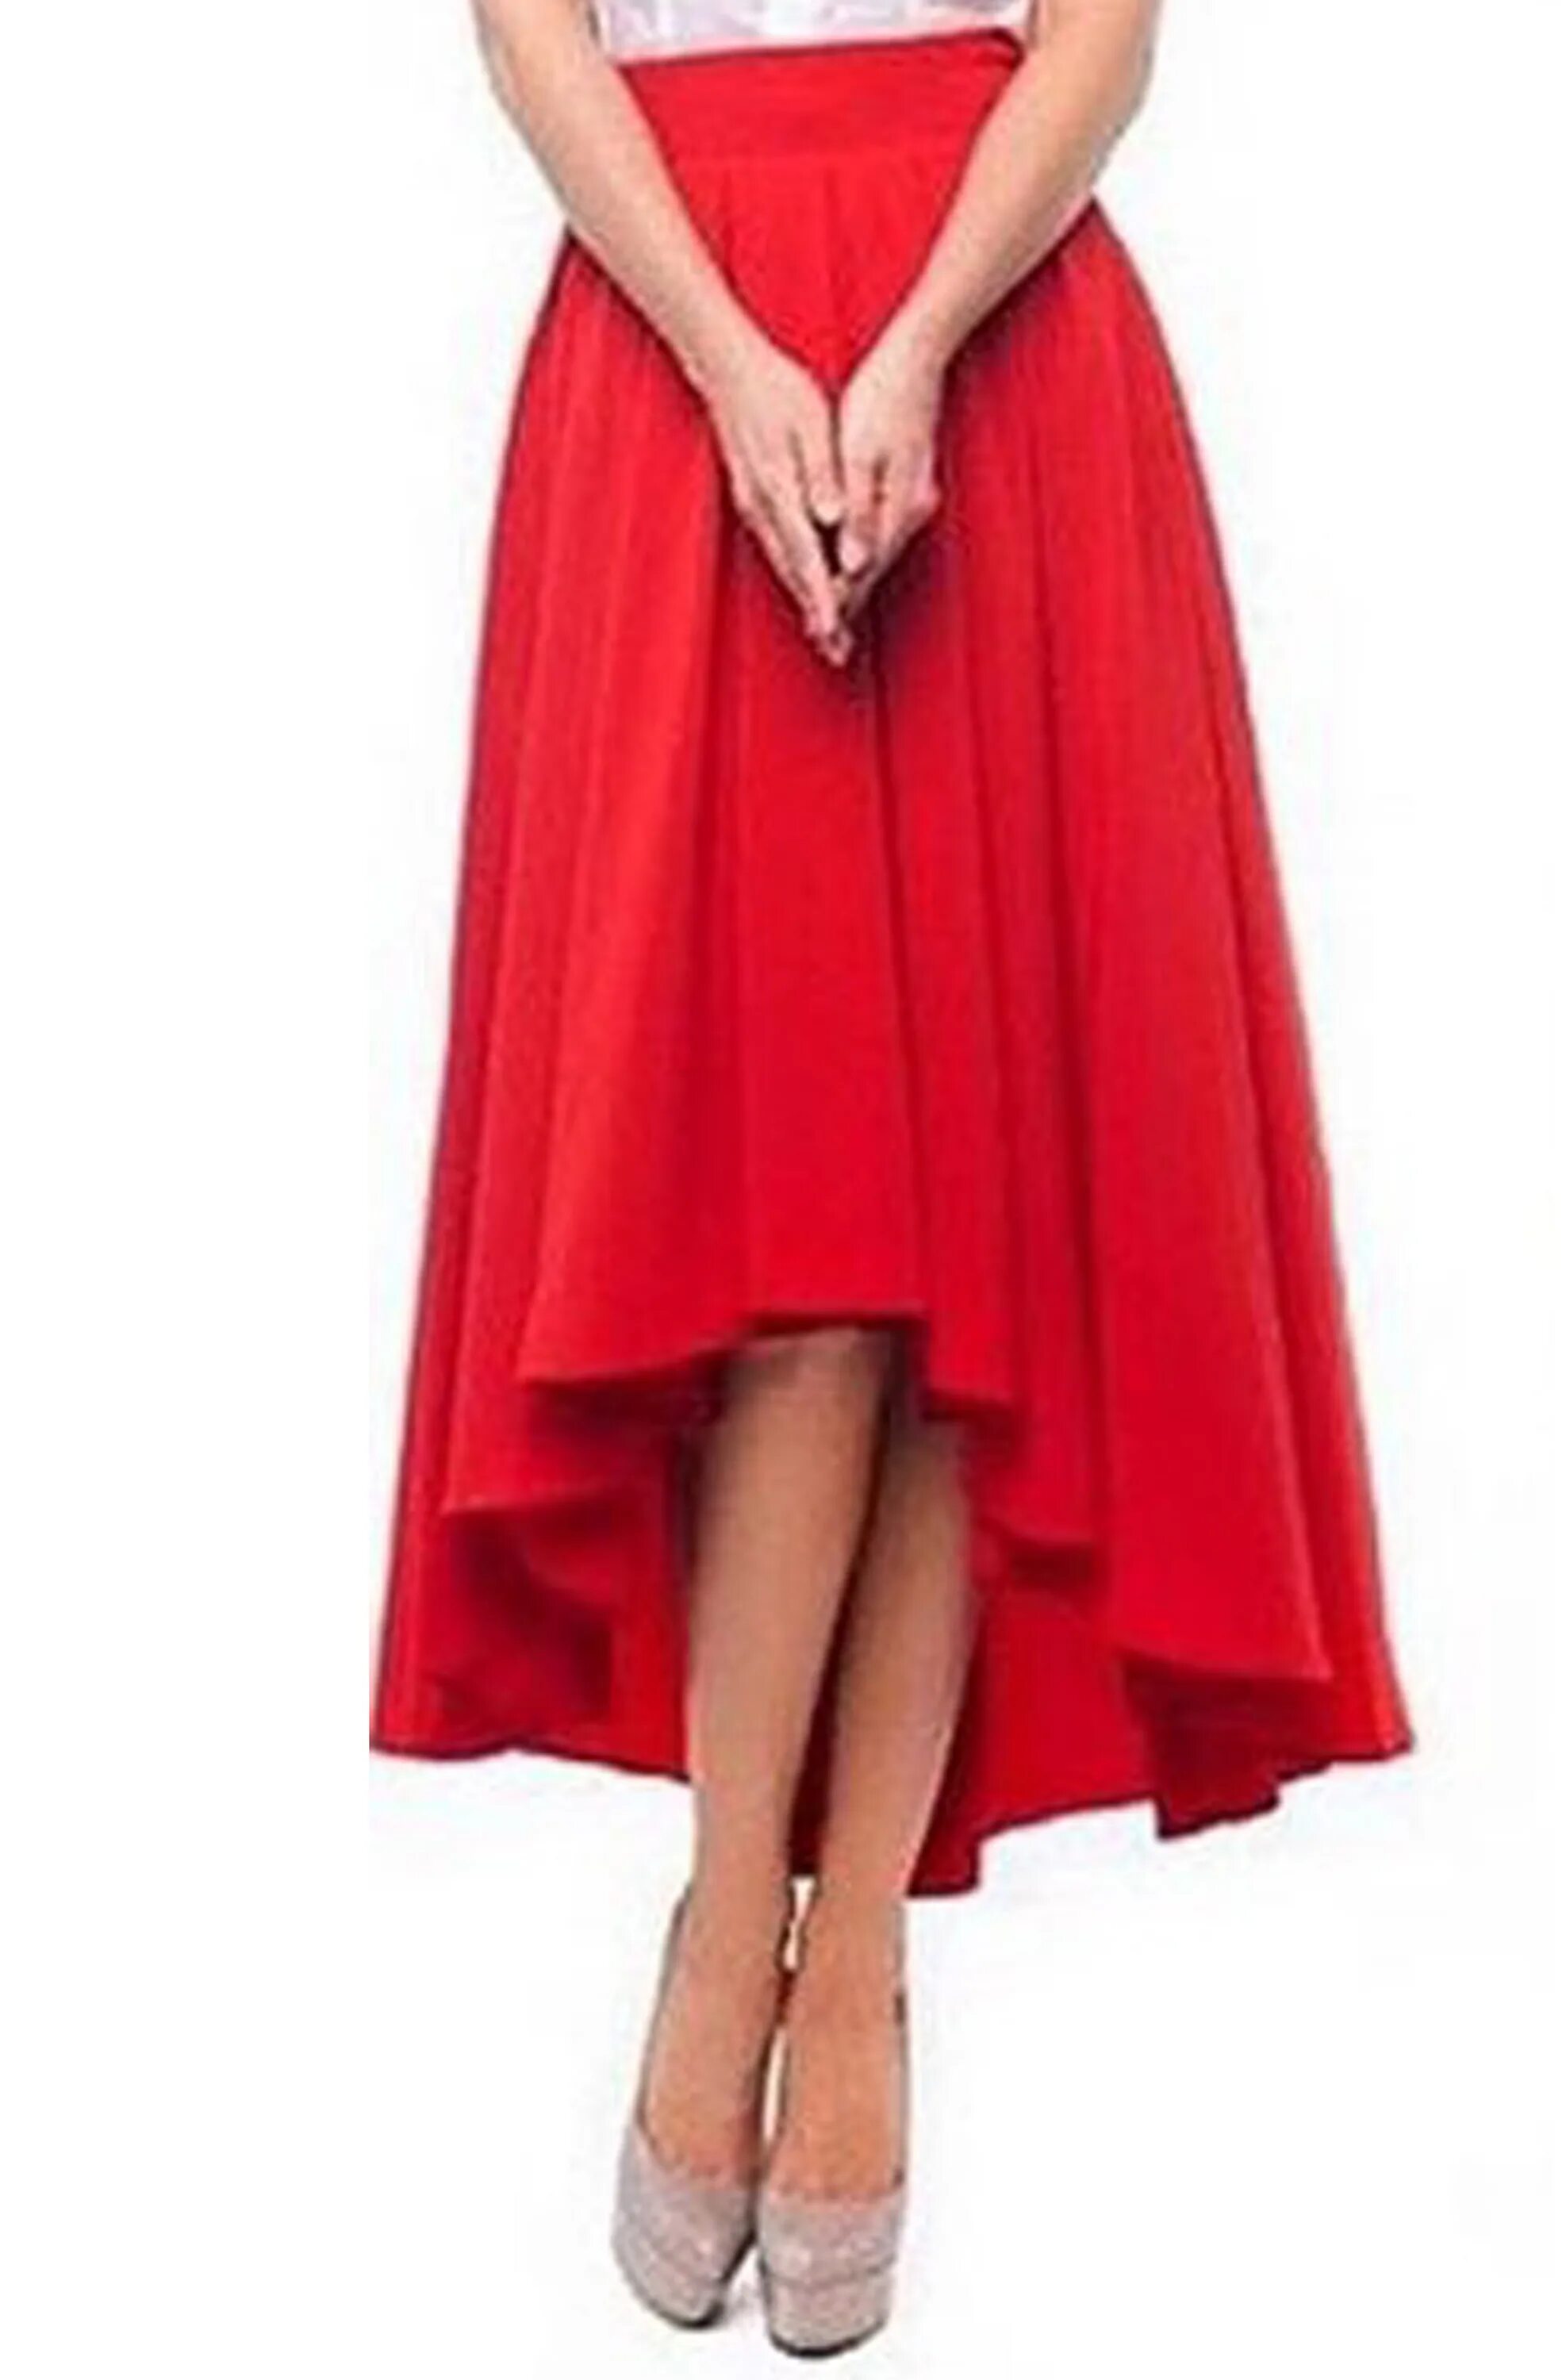 Красная юбка со шлейфом. Юбка женская со шлейфом. Юбка из фатина со шлейфом.